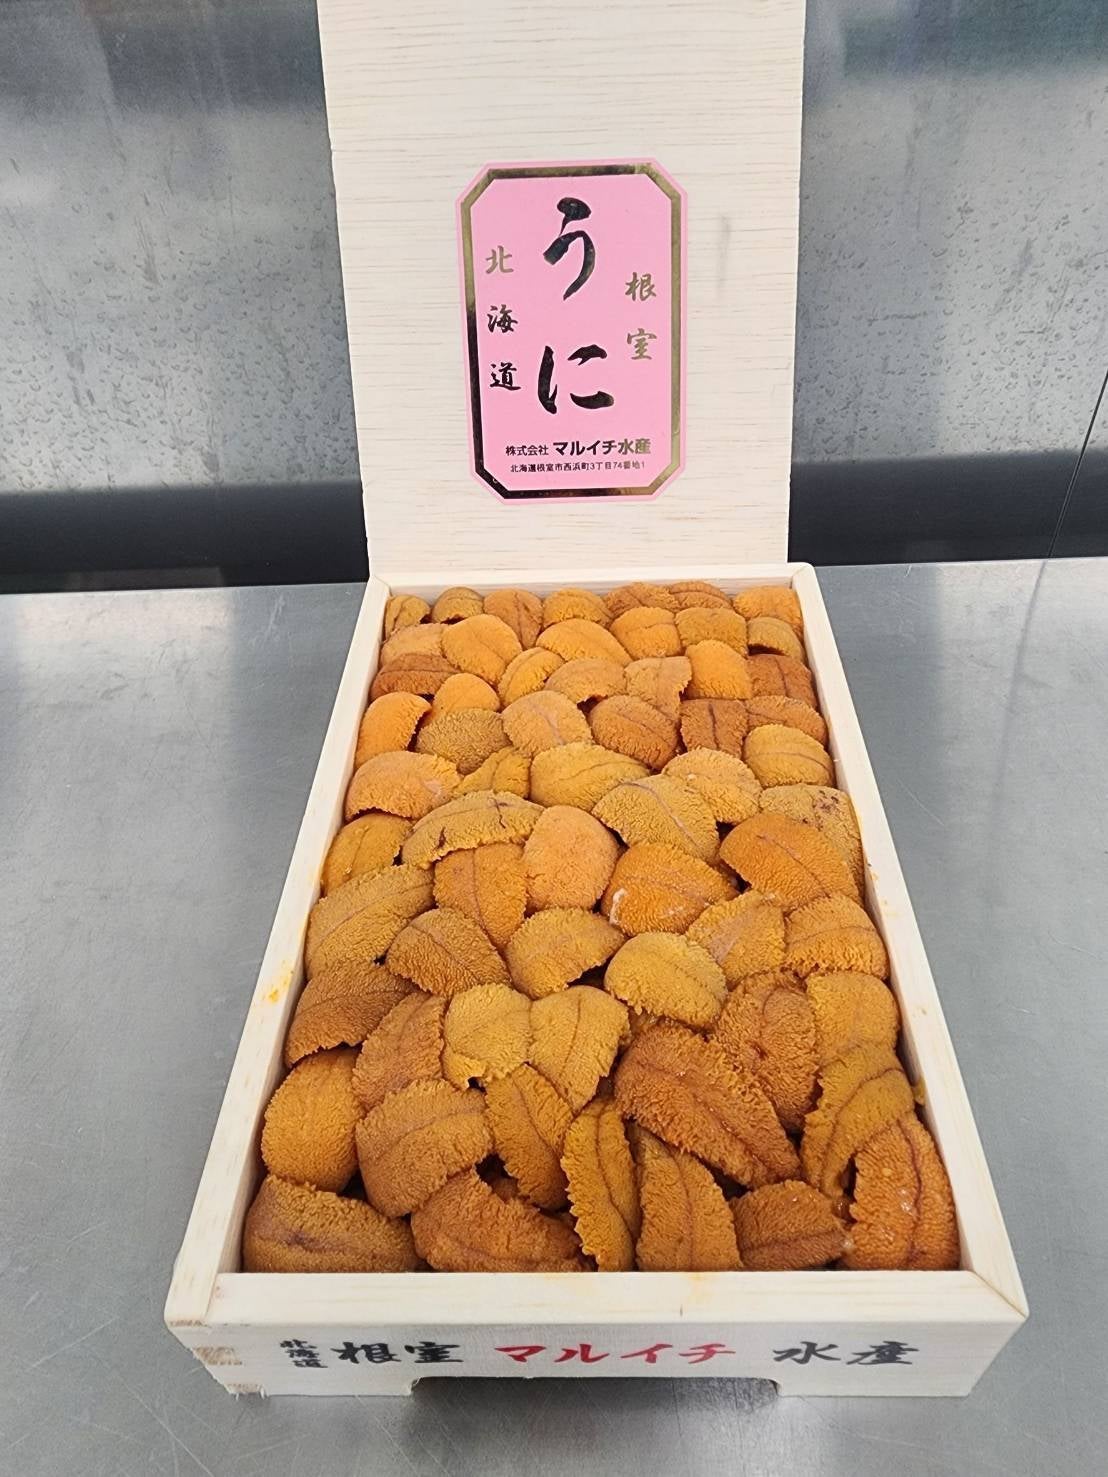 Sea Urchin Sampler 雲丹５種 50g | Sashimi DC by Keita Seafood